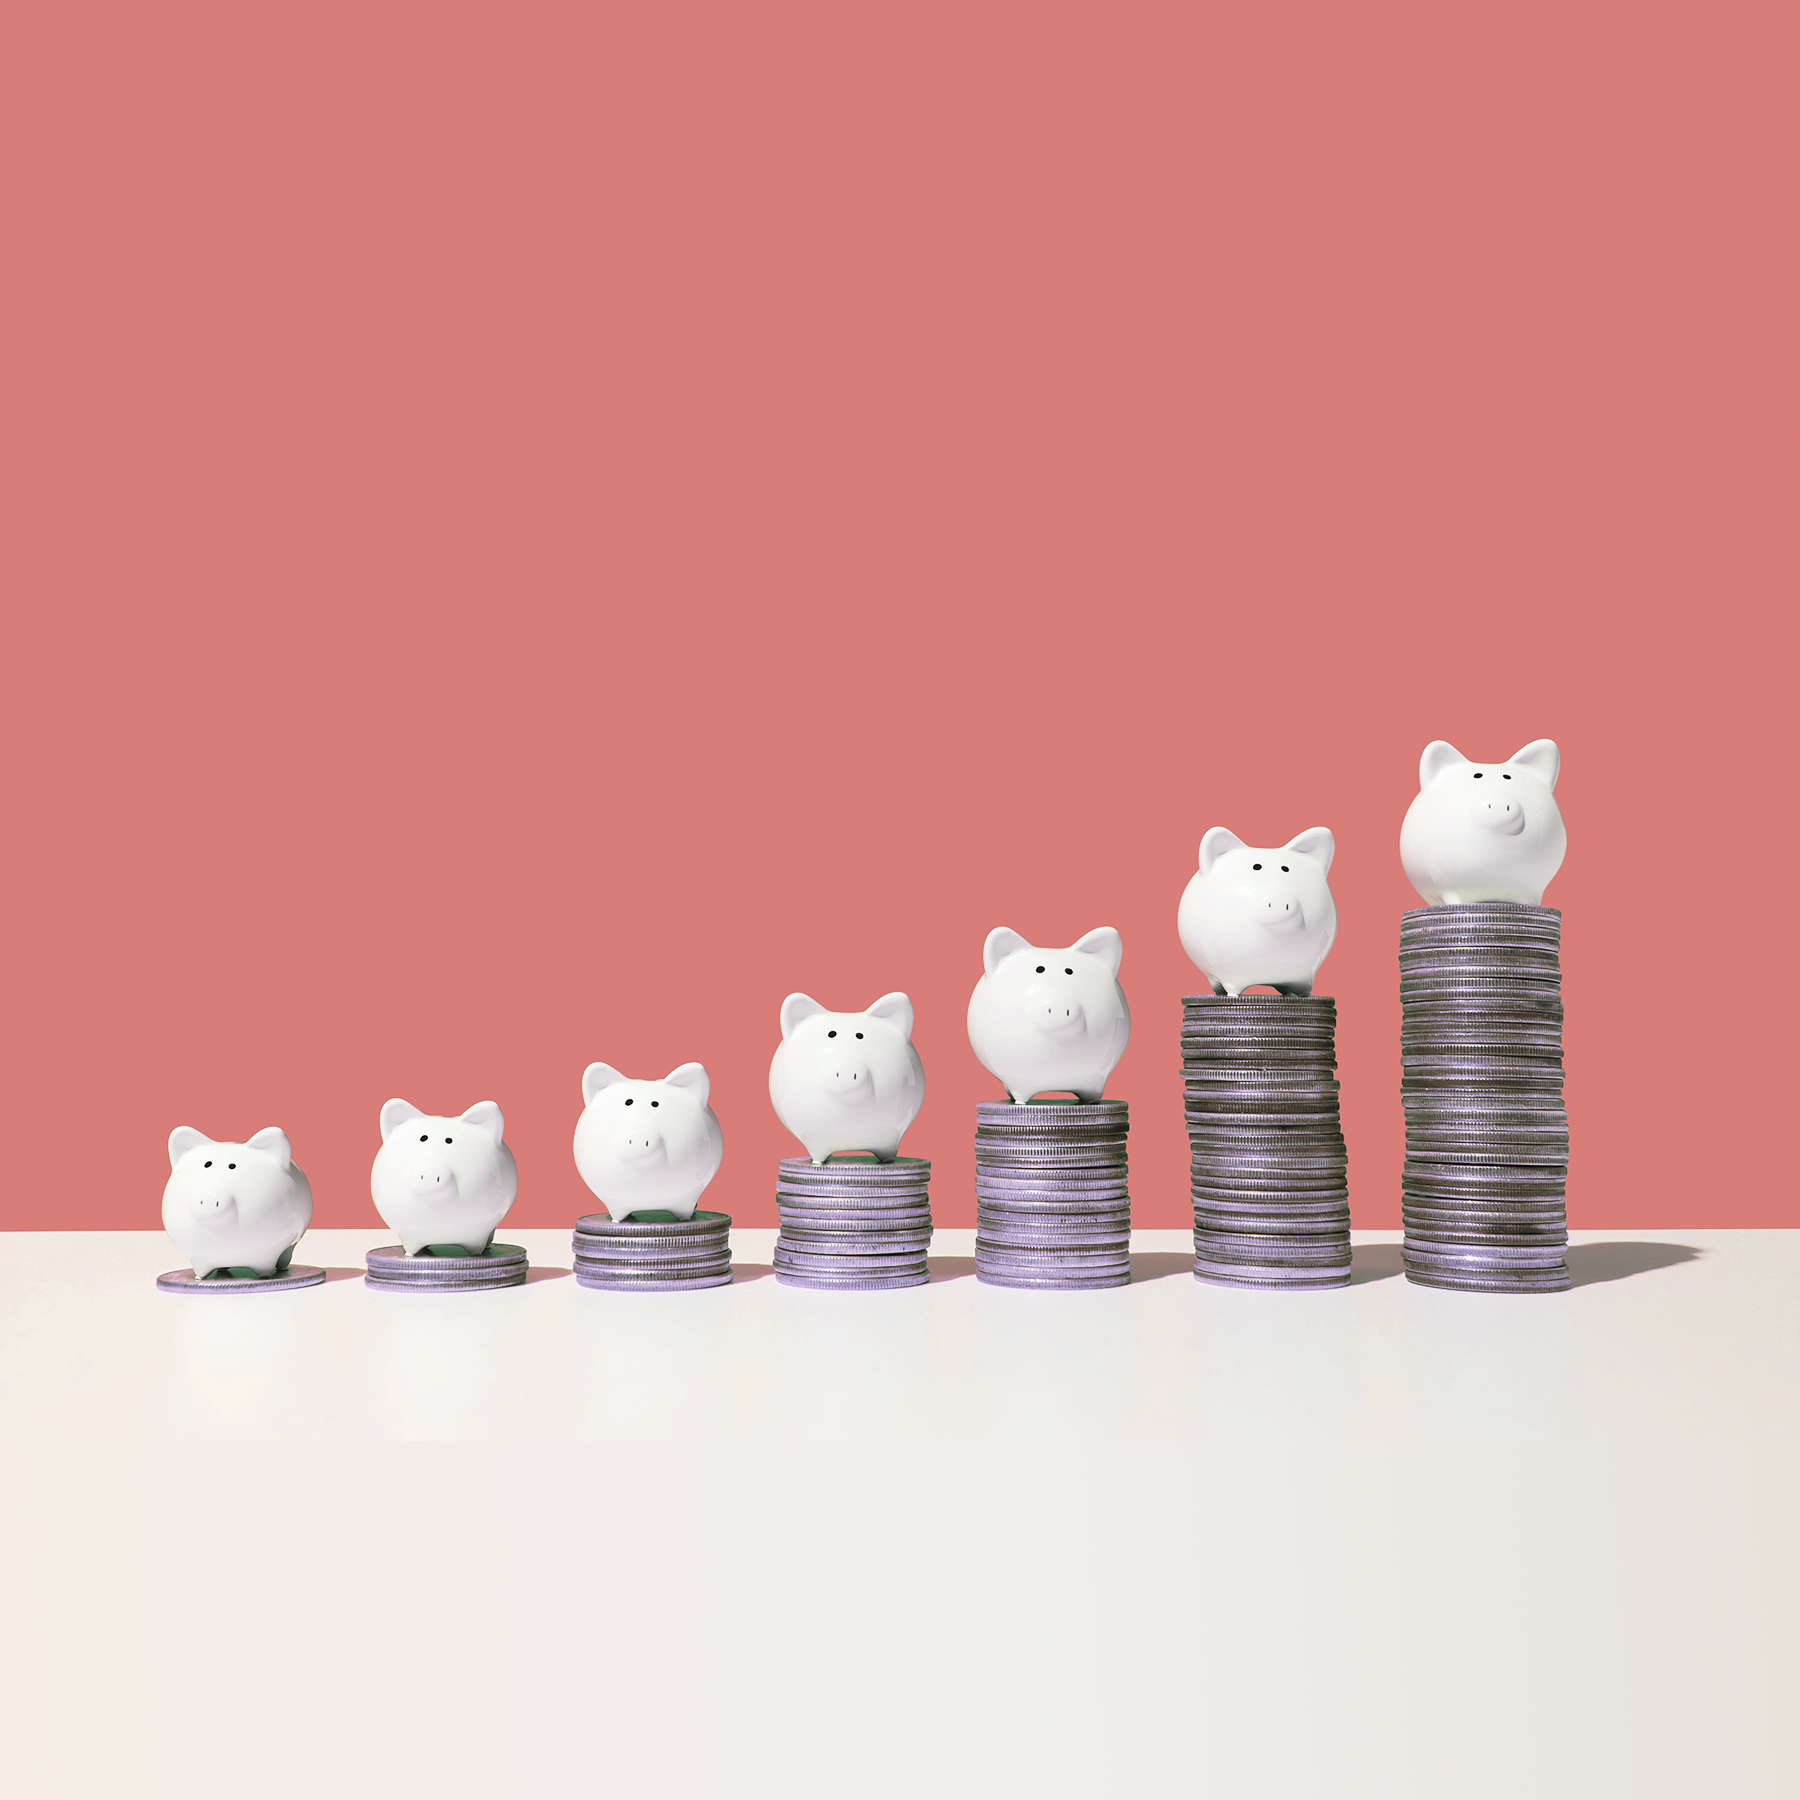 Little piggy banks on ascending stacks of coins